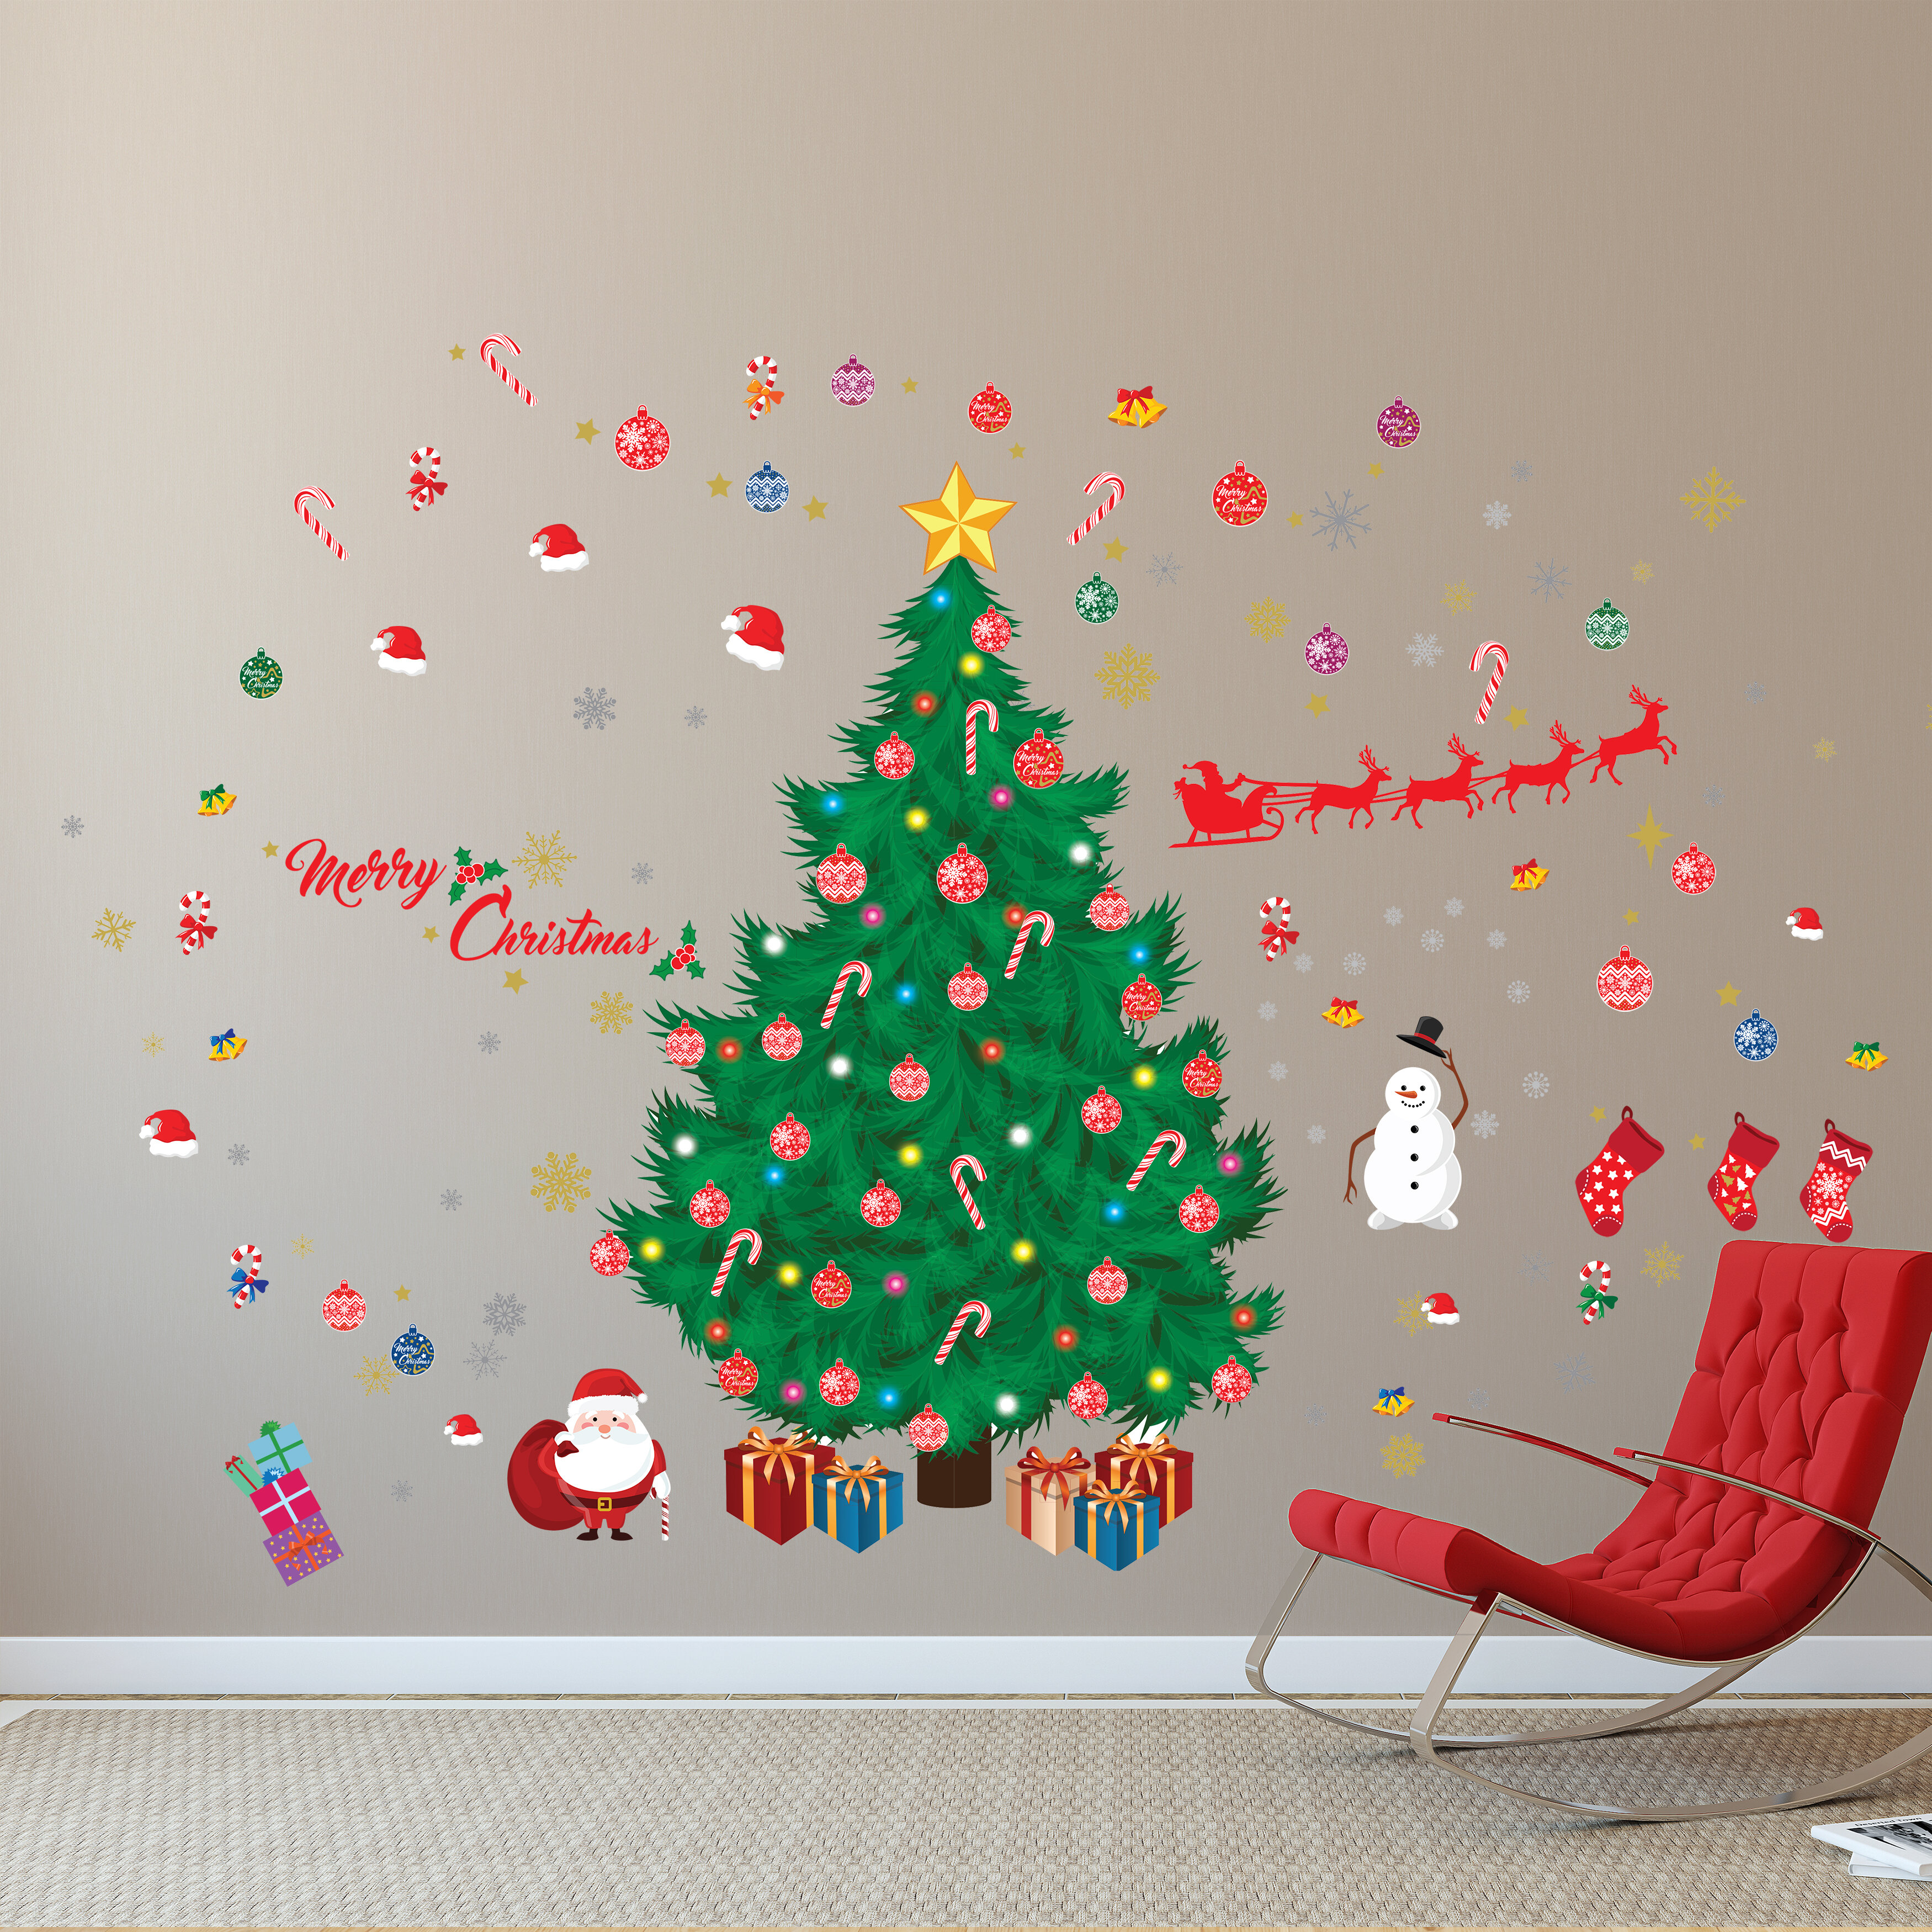 The Holiday Aisle® Christmas Decorations Wall Decal | Wayfair